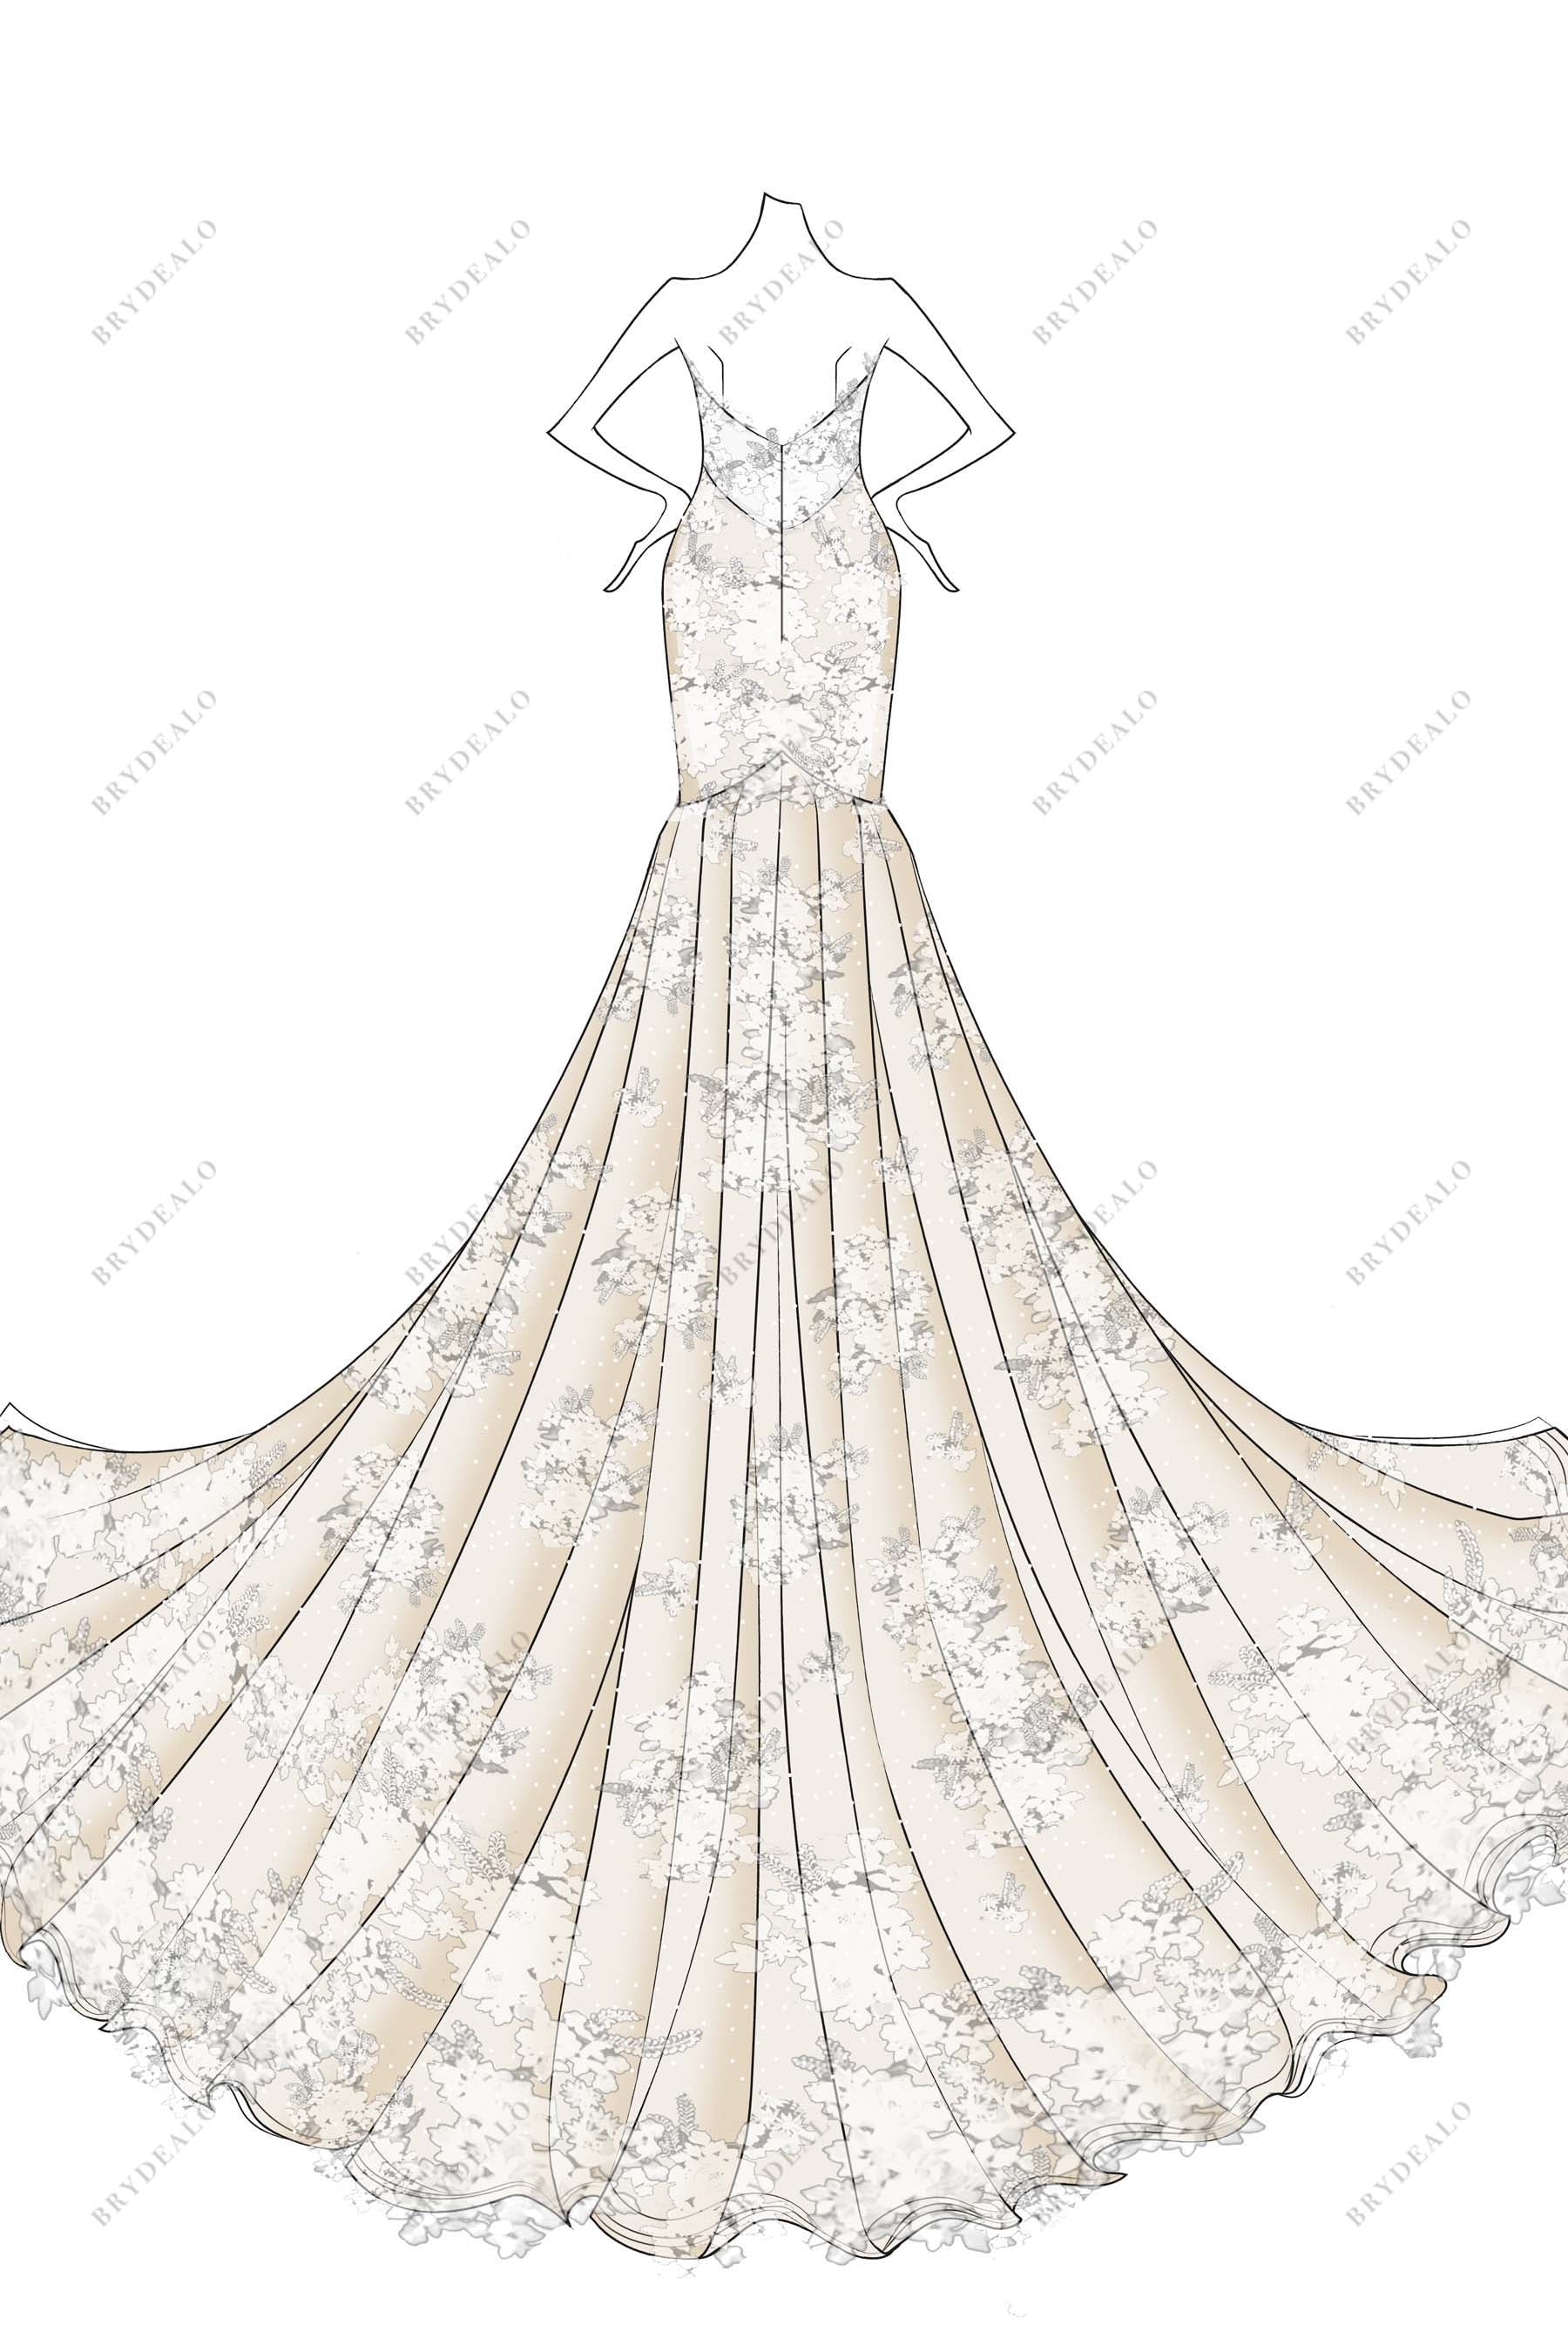 strapless lace mermaid designer wedding dress sketch